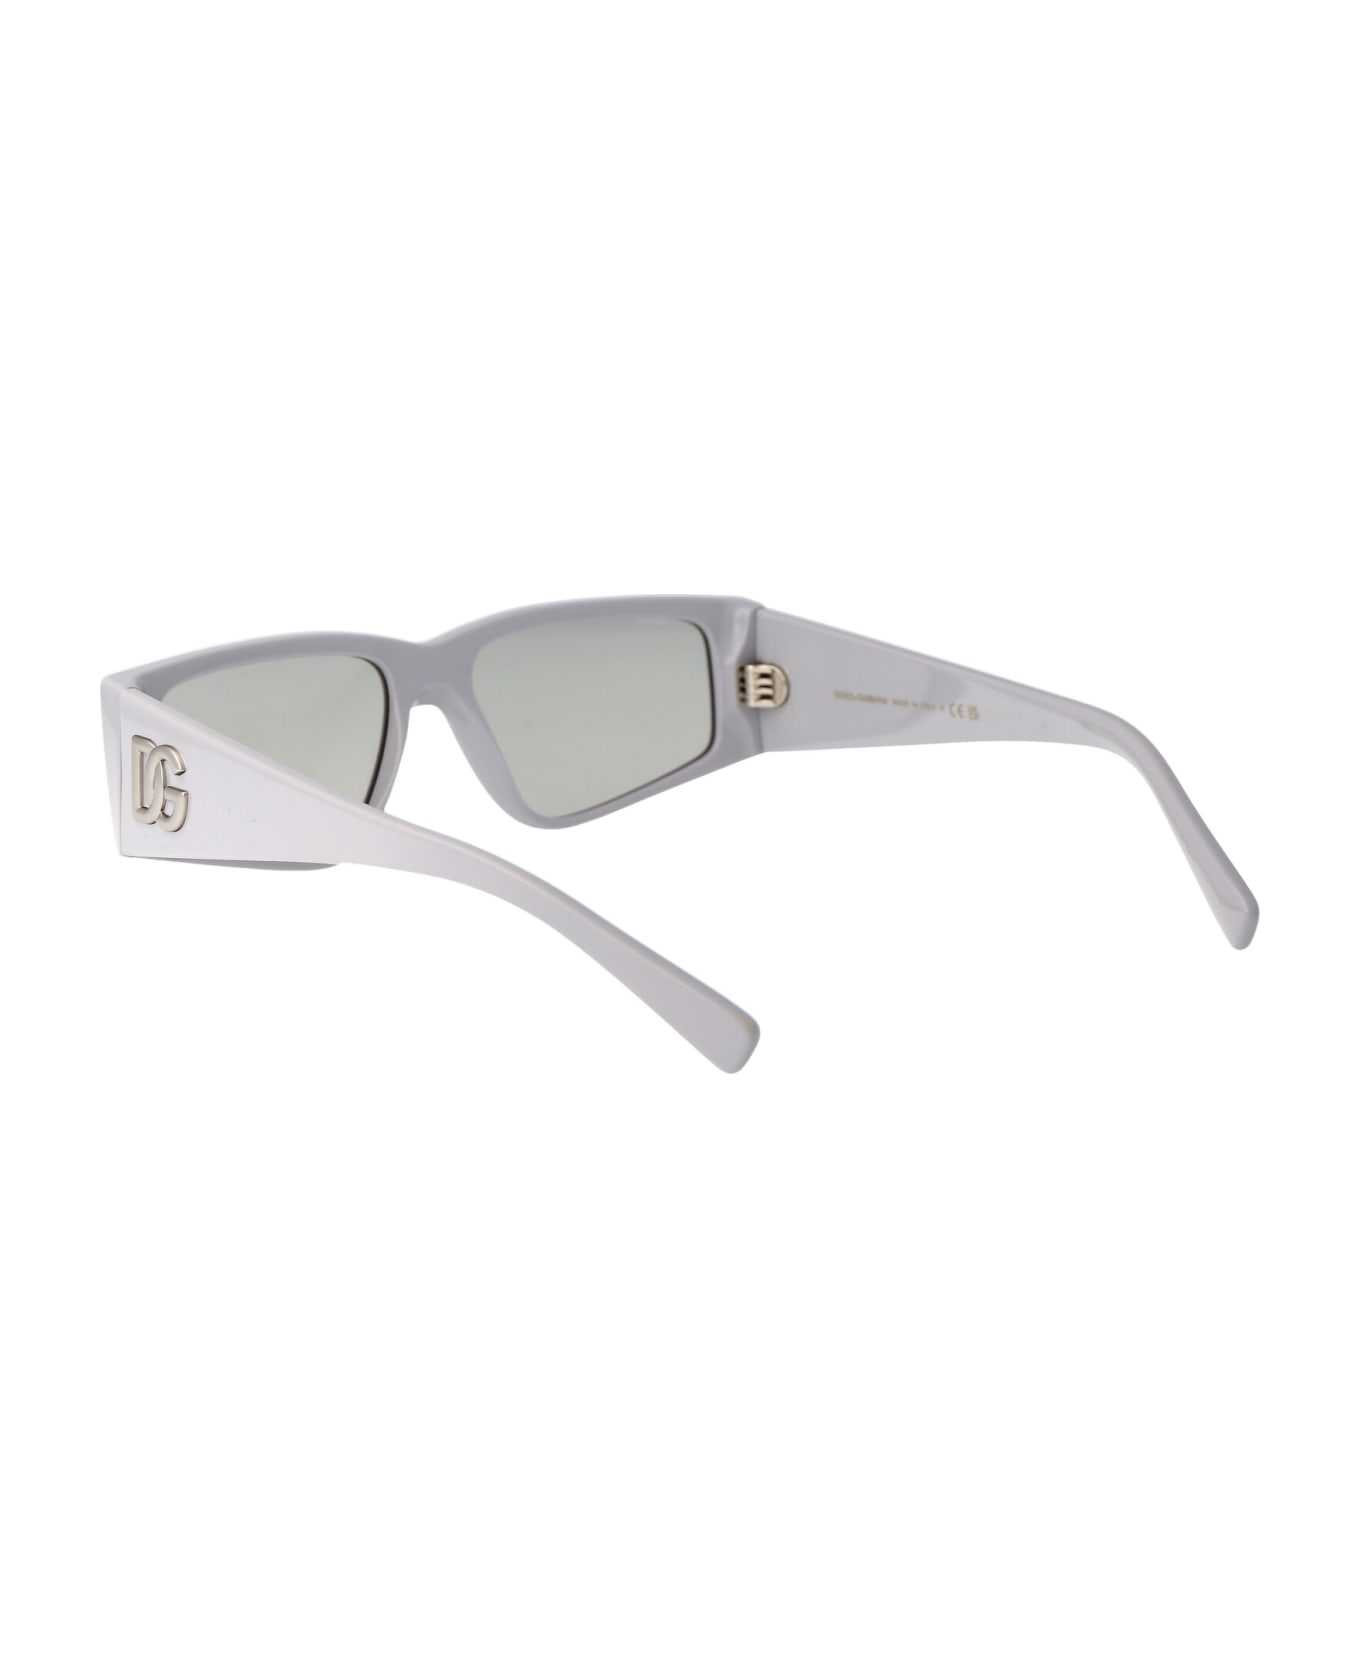 Dolce & Gabbana Eyewear 0dg4453 Sunglasses - 341887 Light Grey